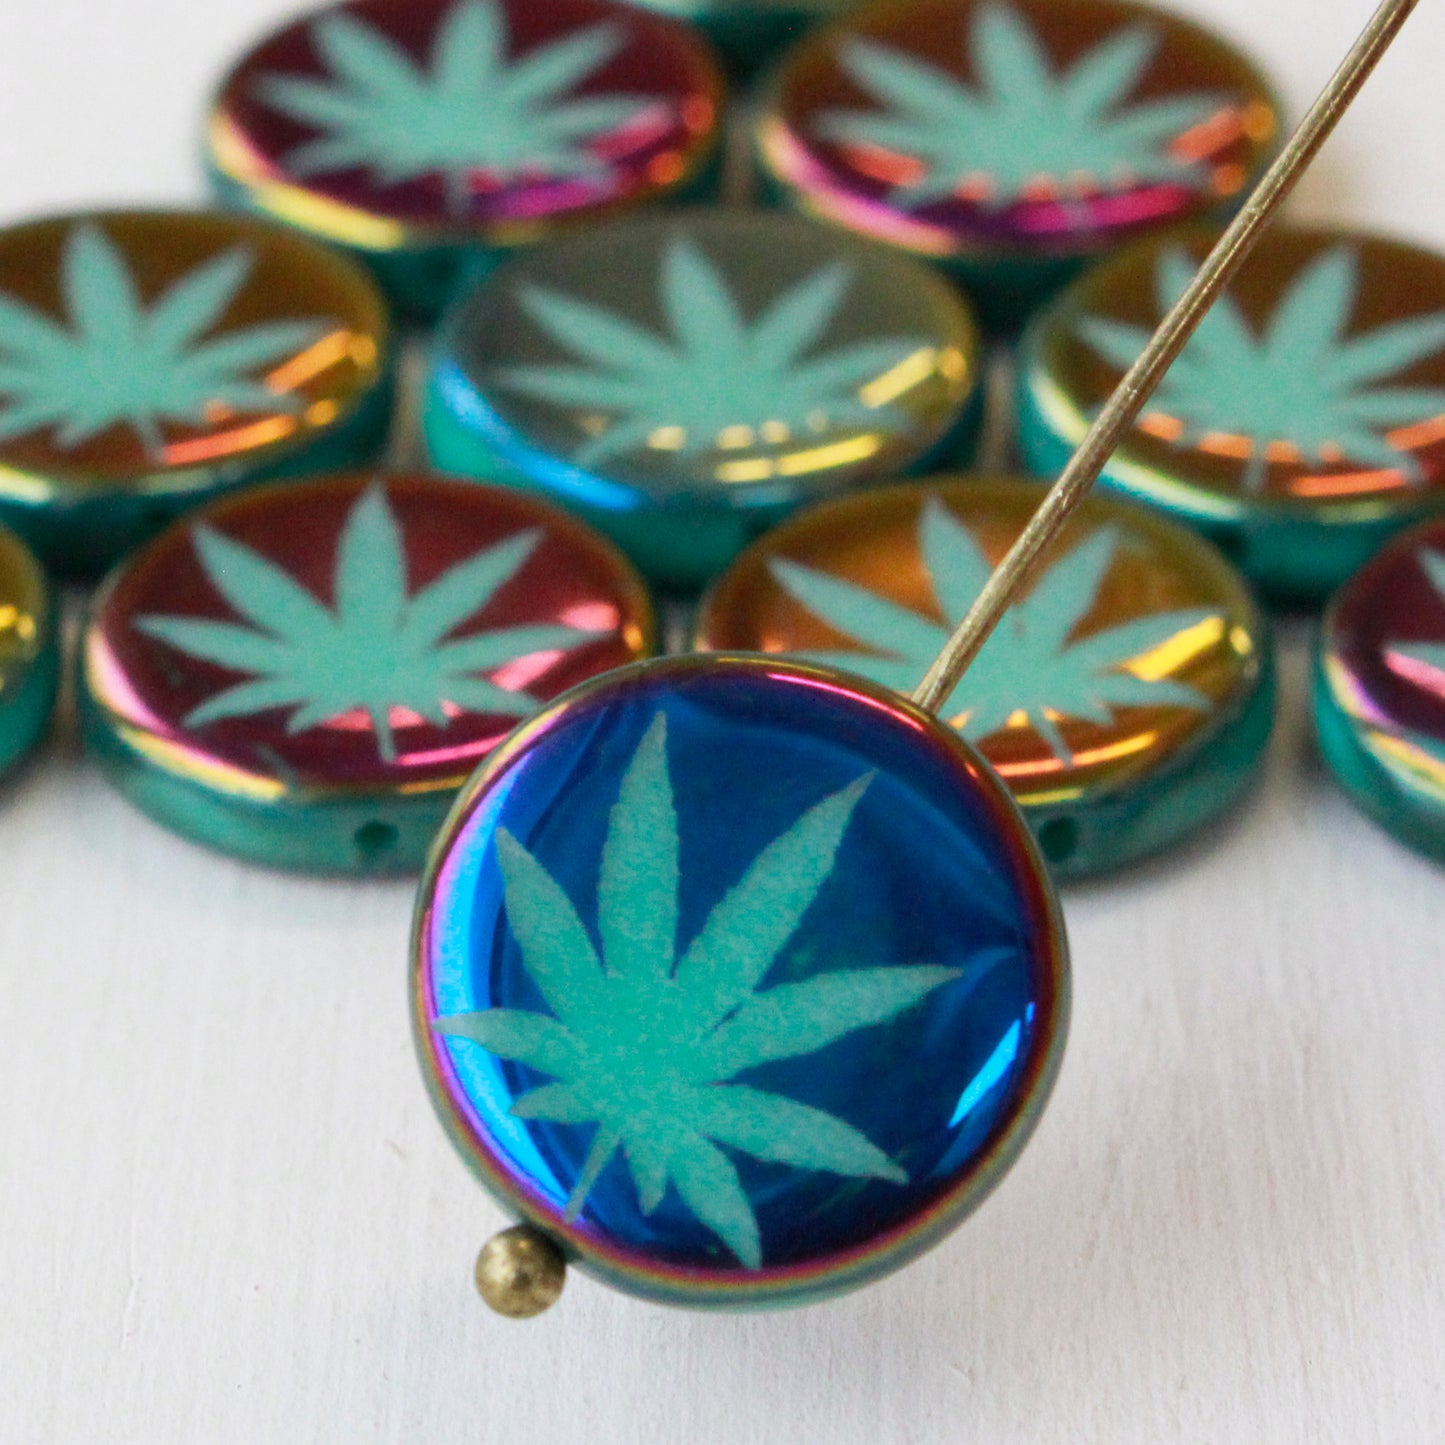 14mm Cannabis Leaf Beads - Seafoam Purple - 8 beads